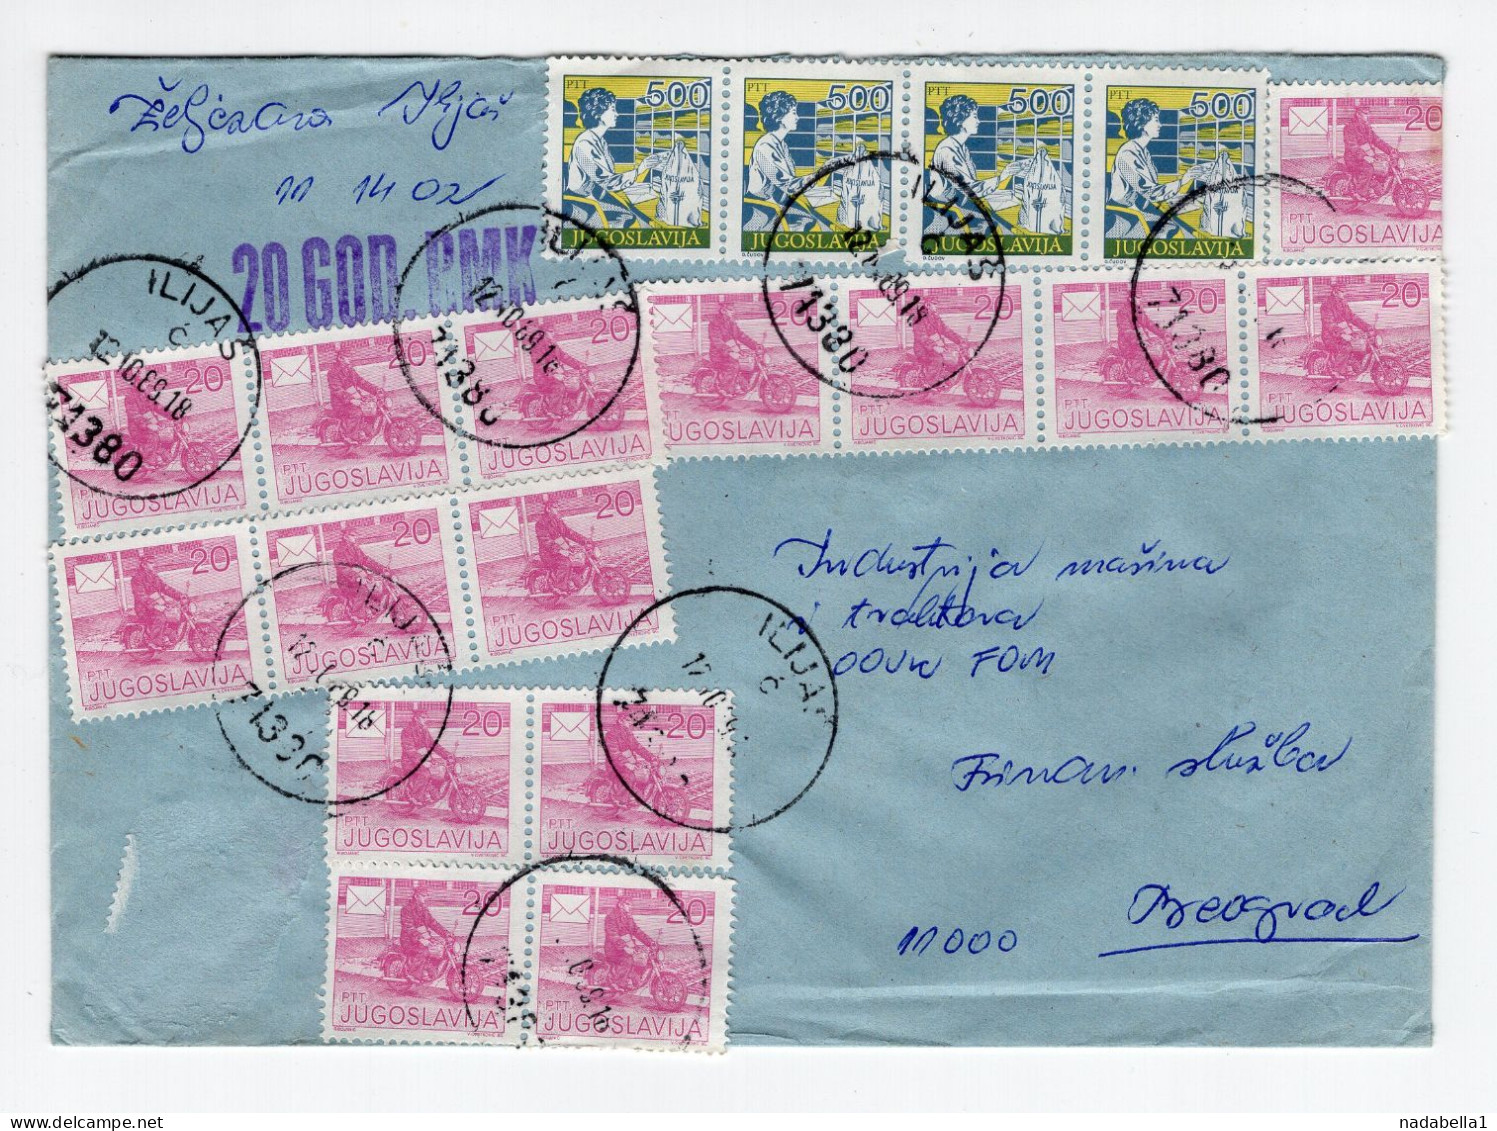 1989. YUGOSLAVIA,BOSNIA,ILIJAS,COVER SENT TO BELGRADE,2300 DIN. FRANKING,INFLATION MAIL - Storia Postale